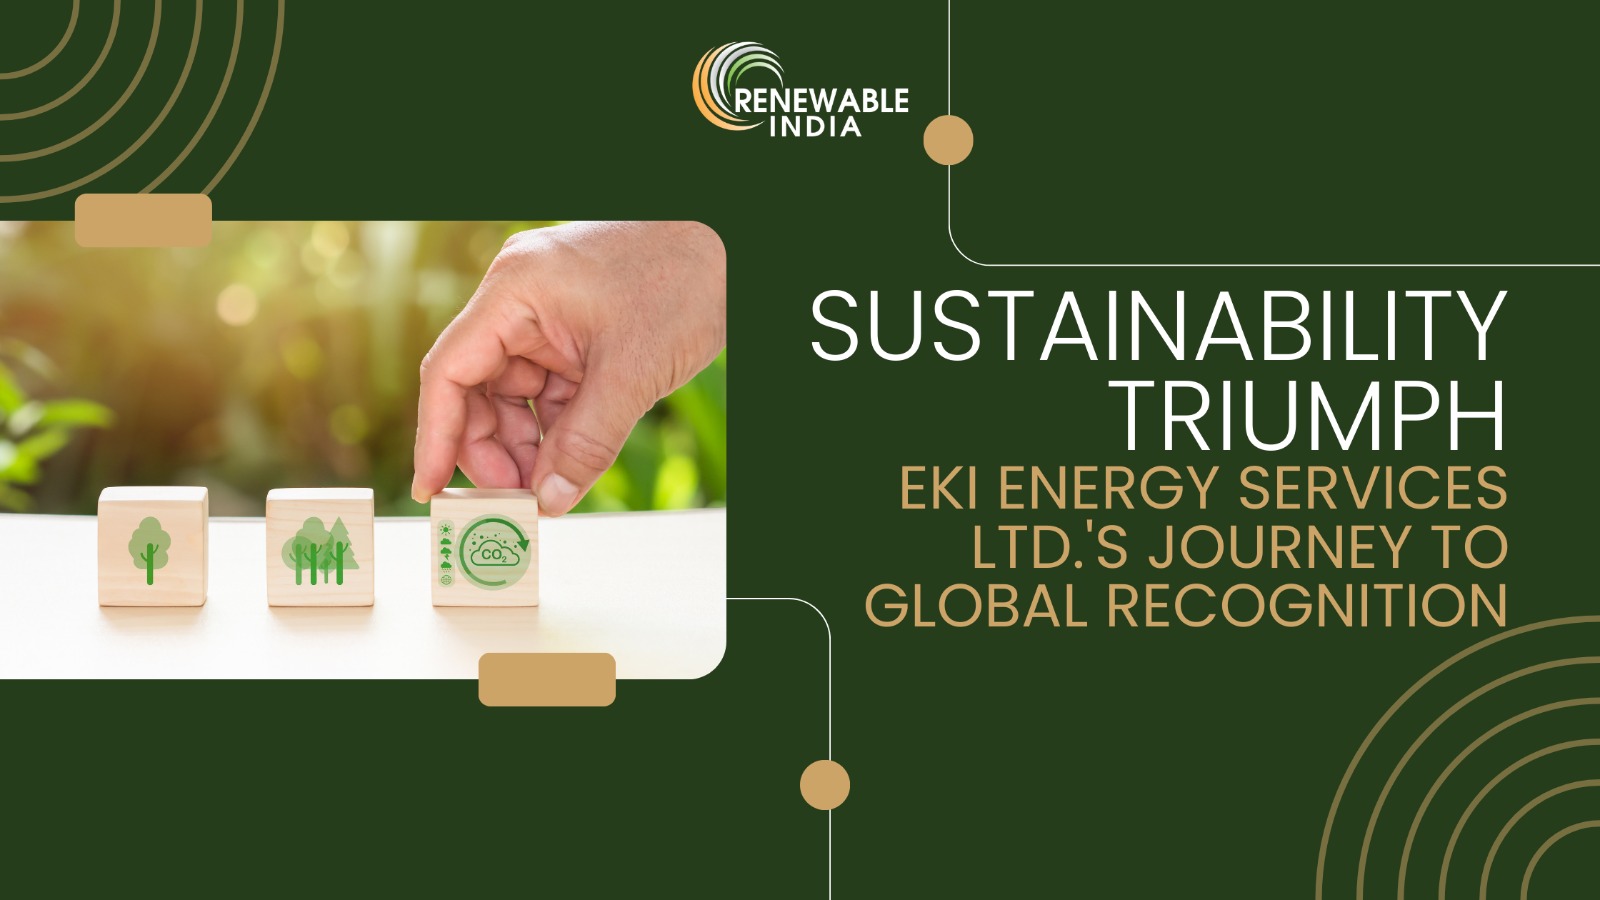 EKI Energy Services Ltd. Achieves Recognition as Global Leader in Renewable Energy Carbon Credit Development